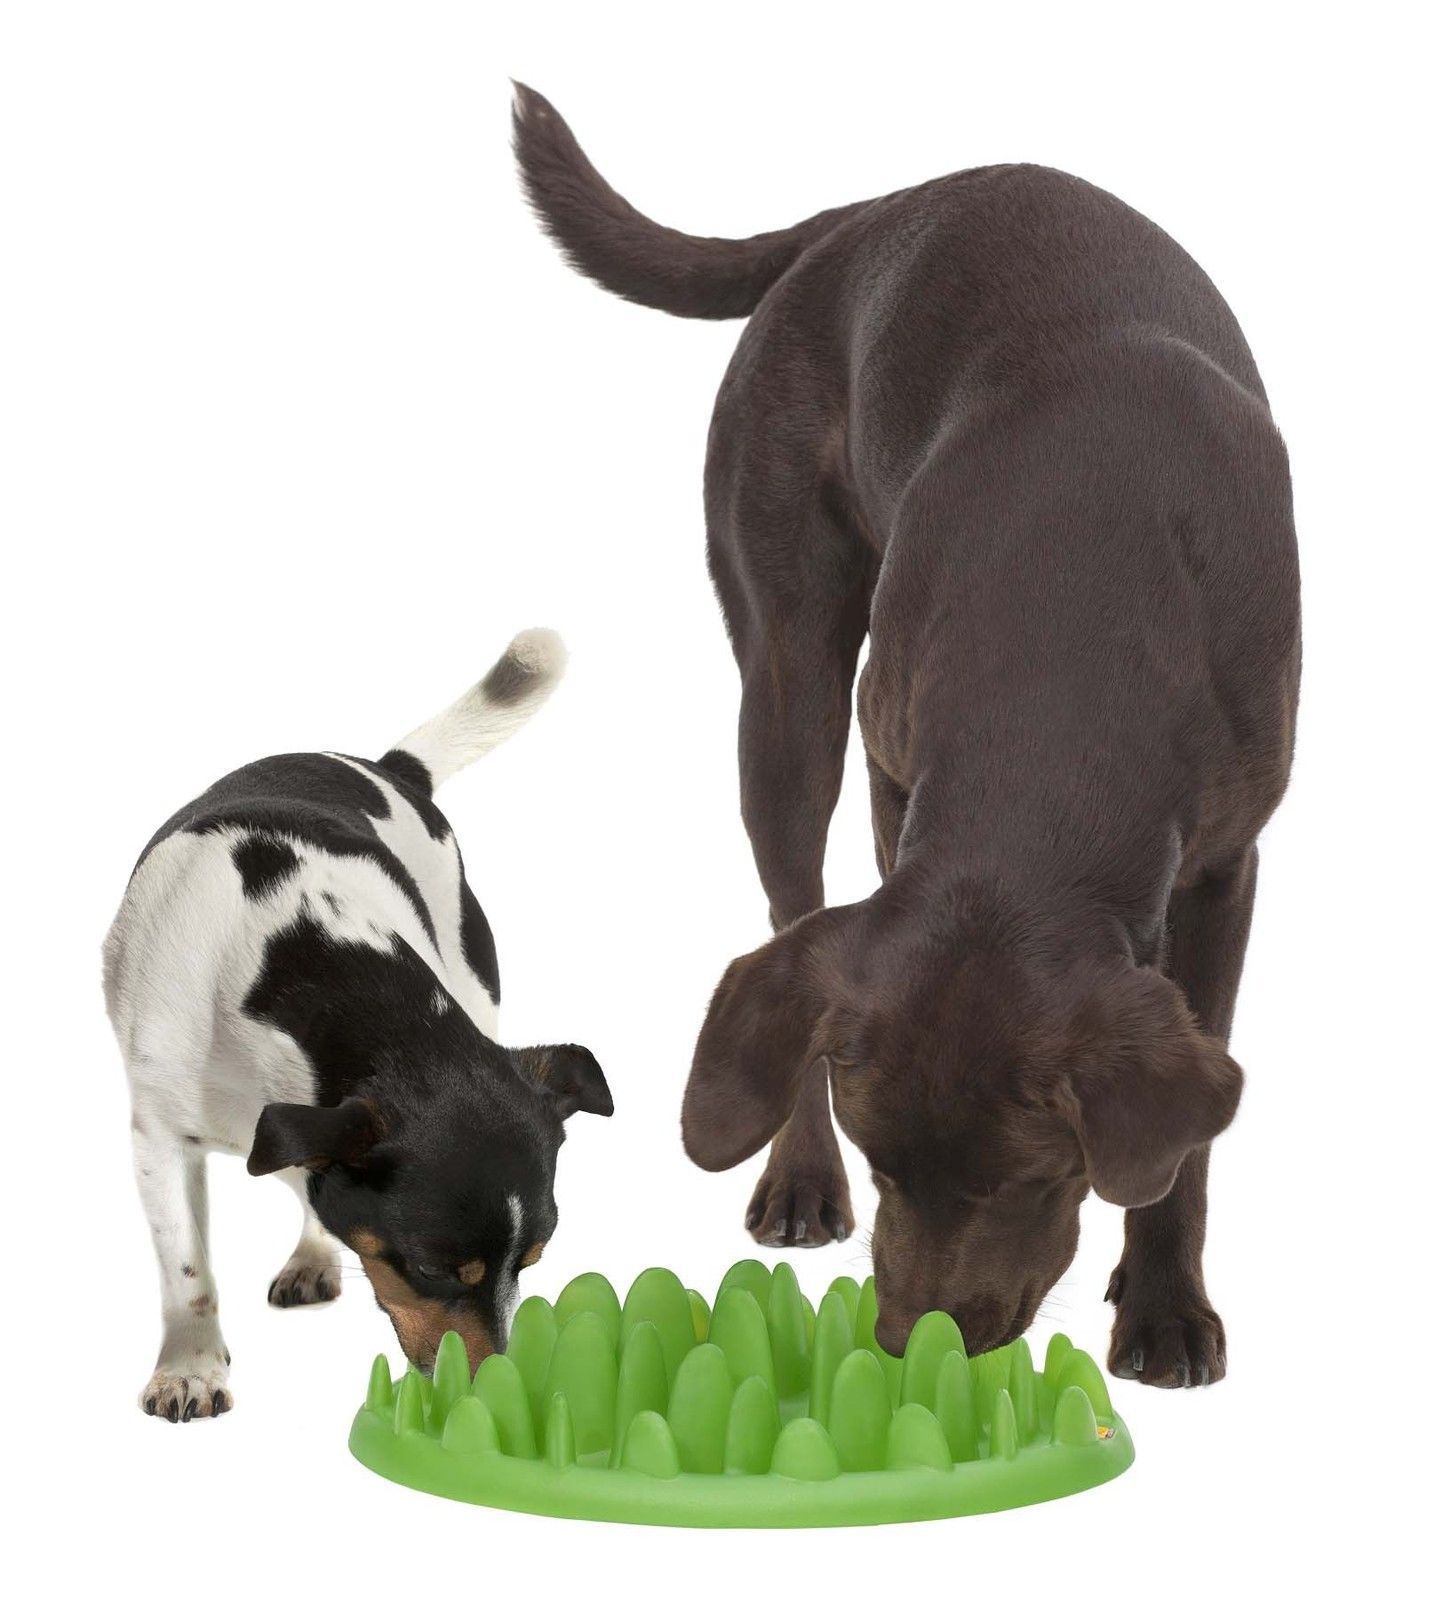 Zippy Paws Plush Squeaker Dog Toy - Birthday Box with Cake, Balloon & Party Hat